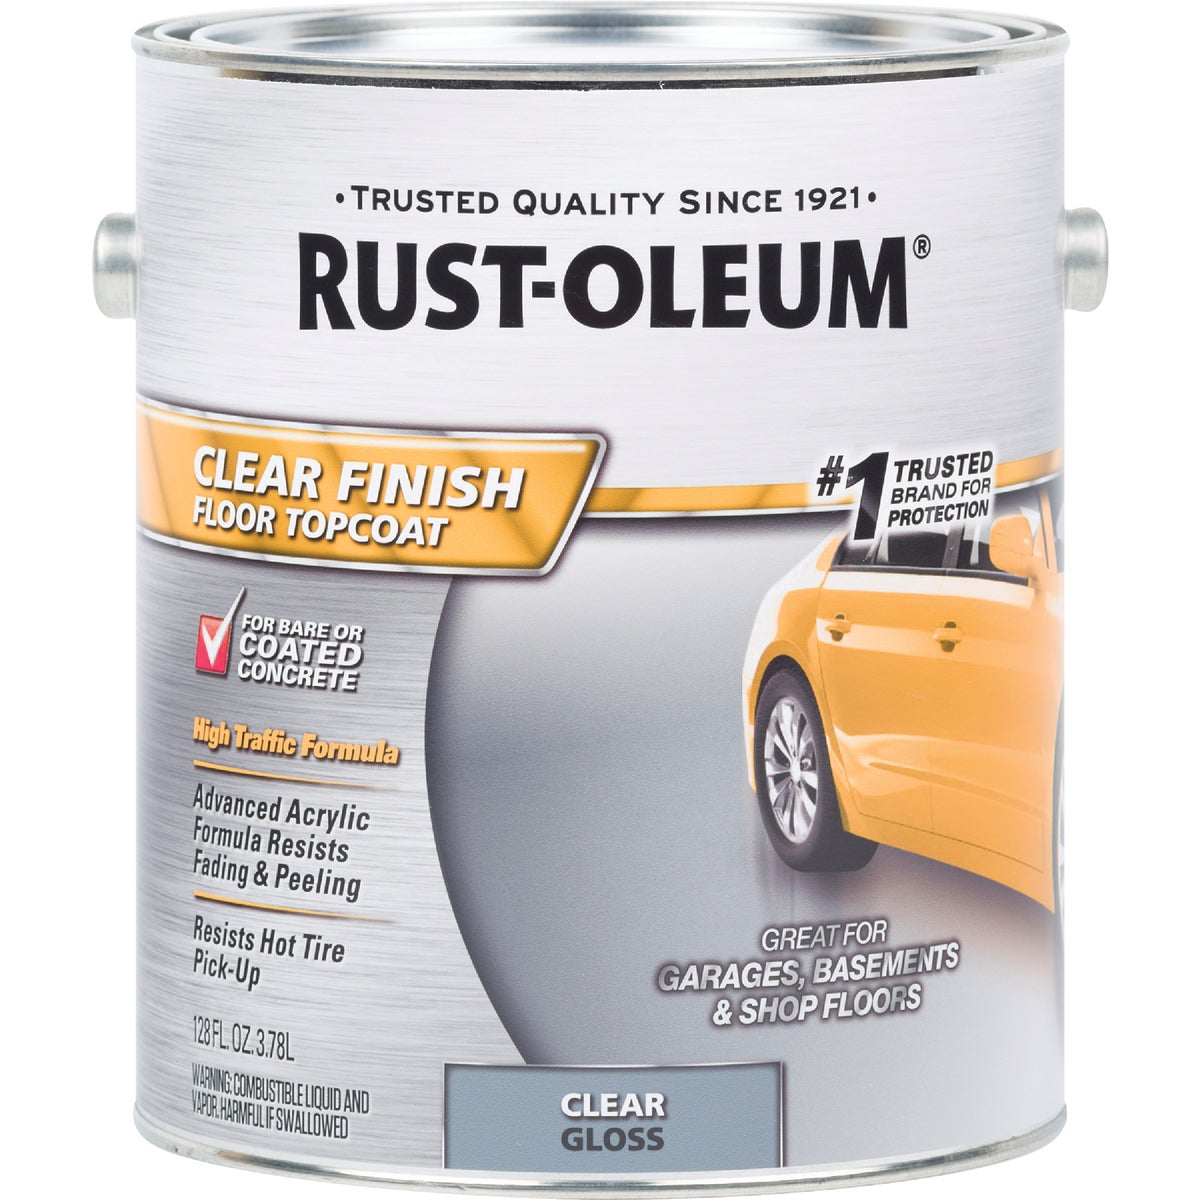 Rust-Oleum Clear Finish Topcoat Floor Coating, 1 Gal.